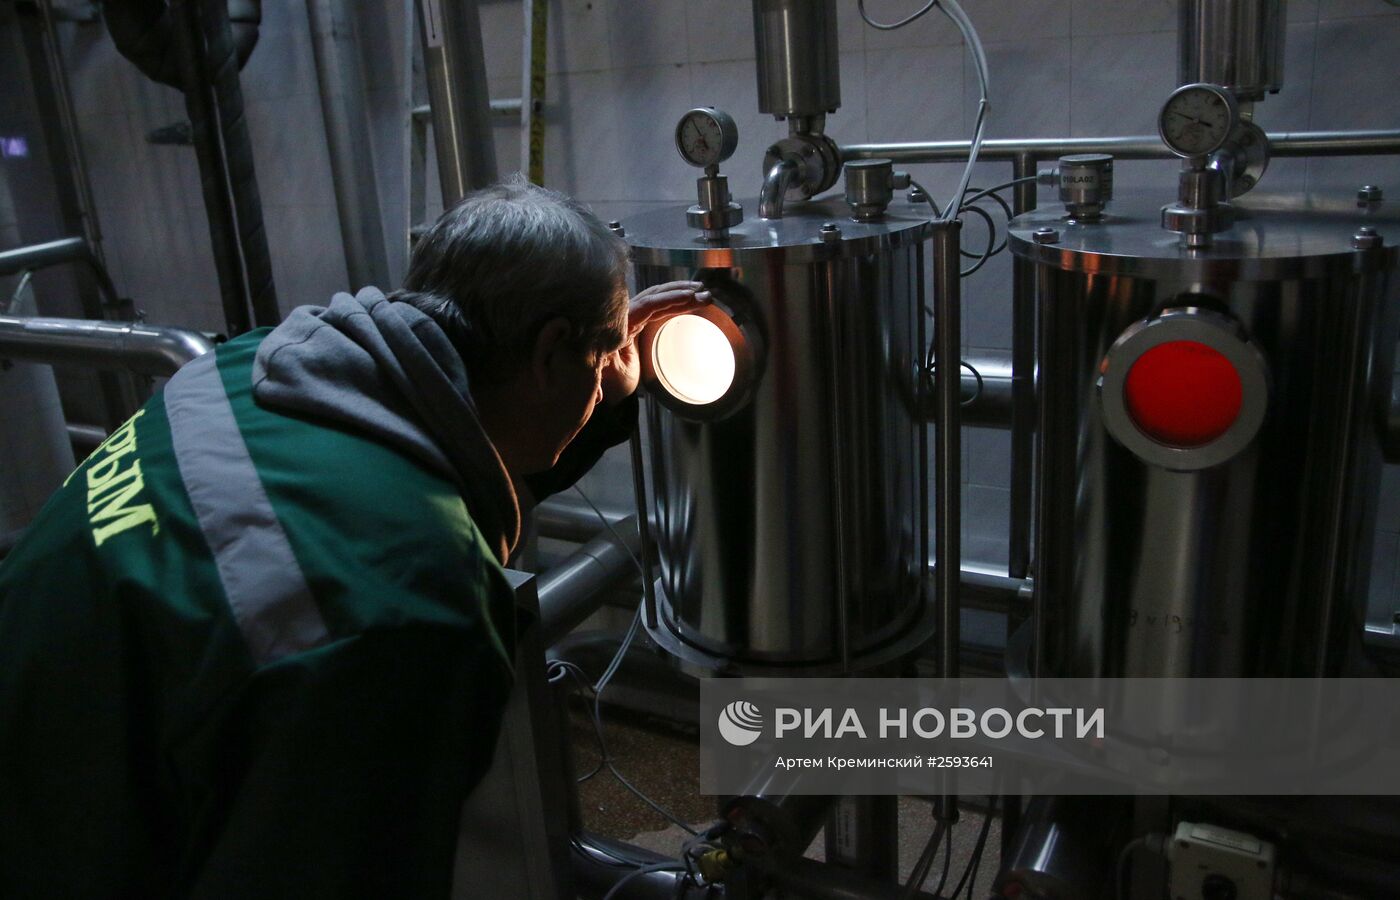 Производство пива на комбинате "Крым" в Симферополе